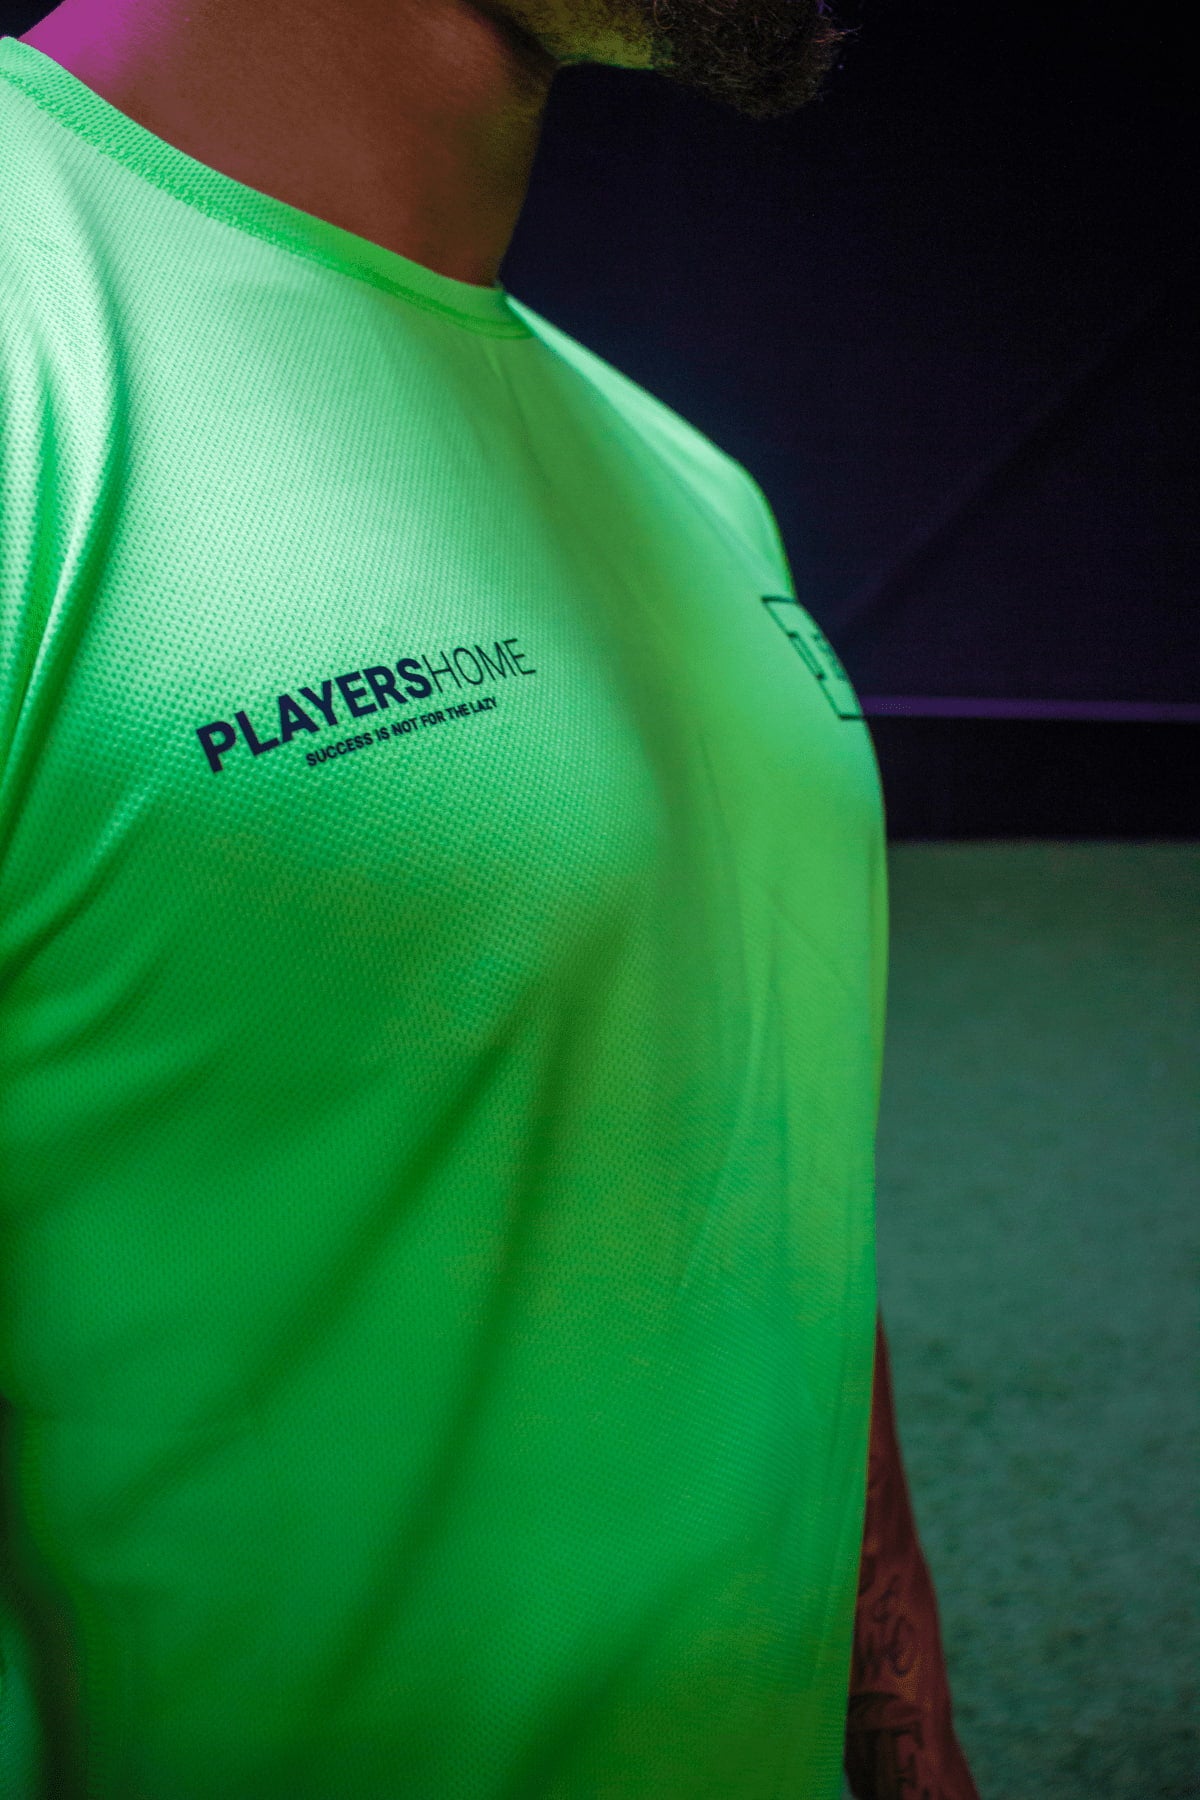 PLAYERHOME x TRUST T-Shirt - Neon Green